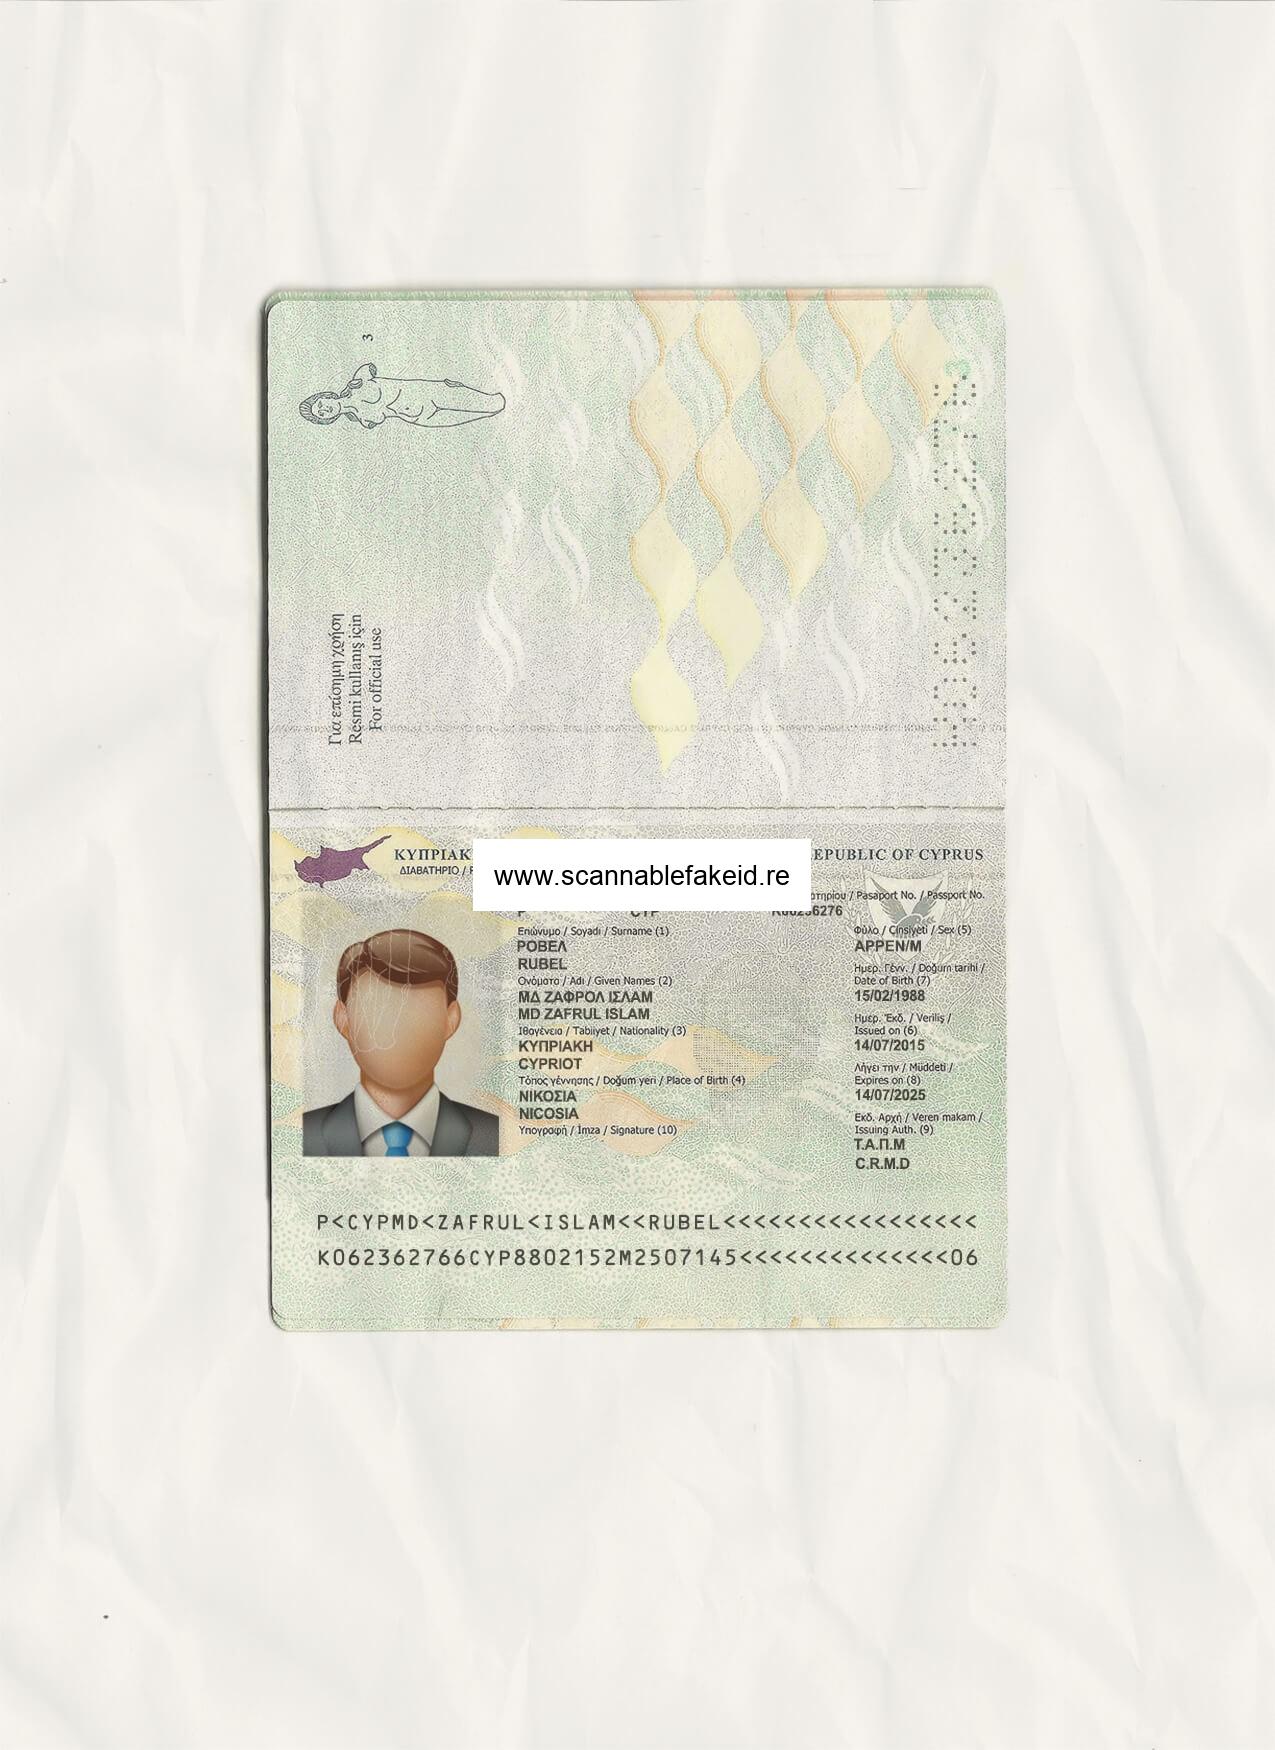 Cyprus Fake Passport - Buy Scannable Fake ID Online - Fake Drivers License